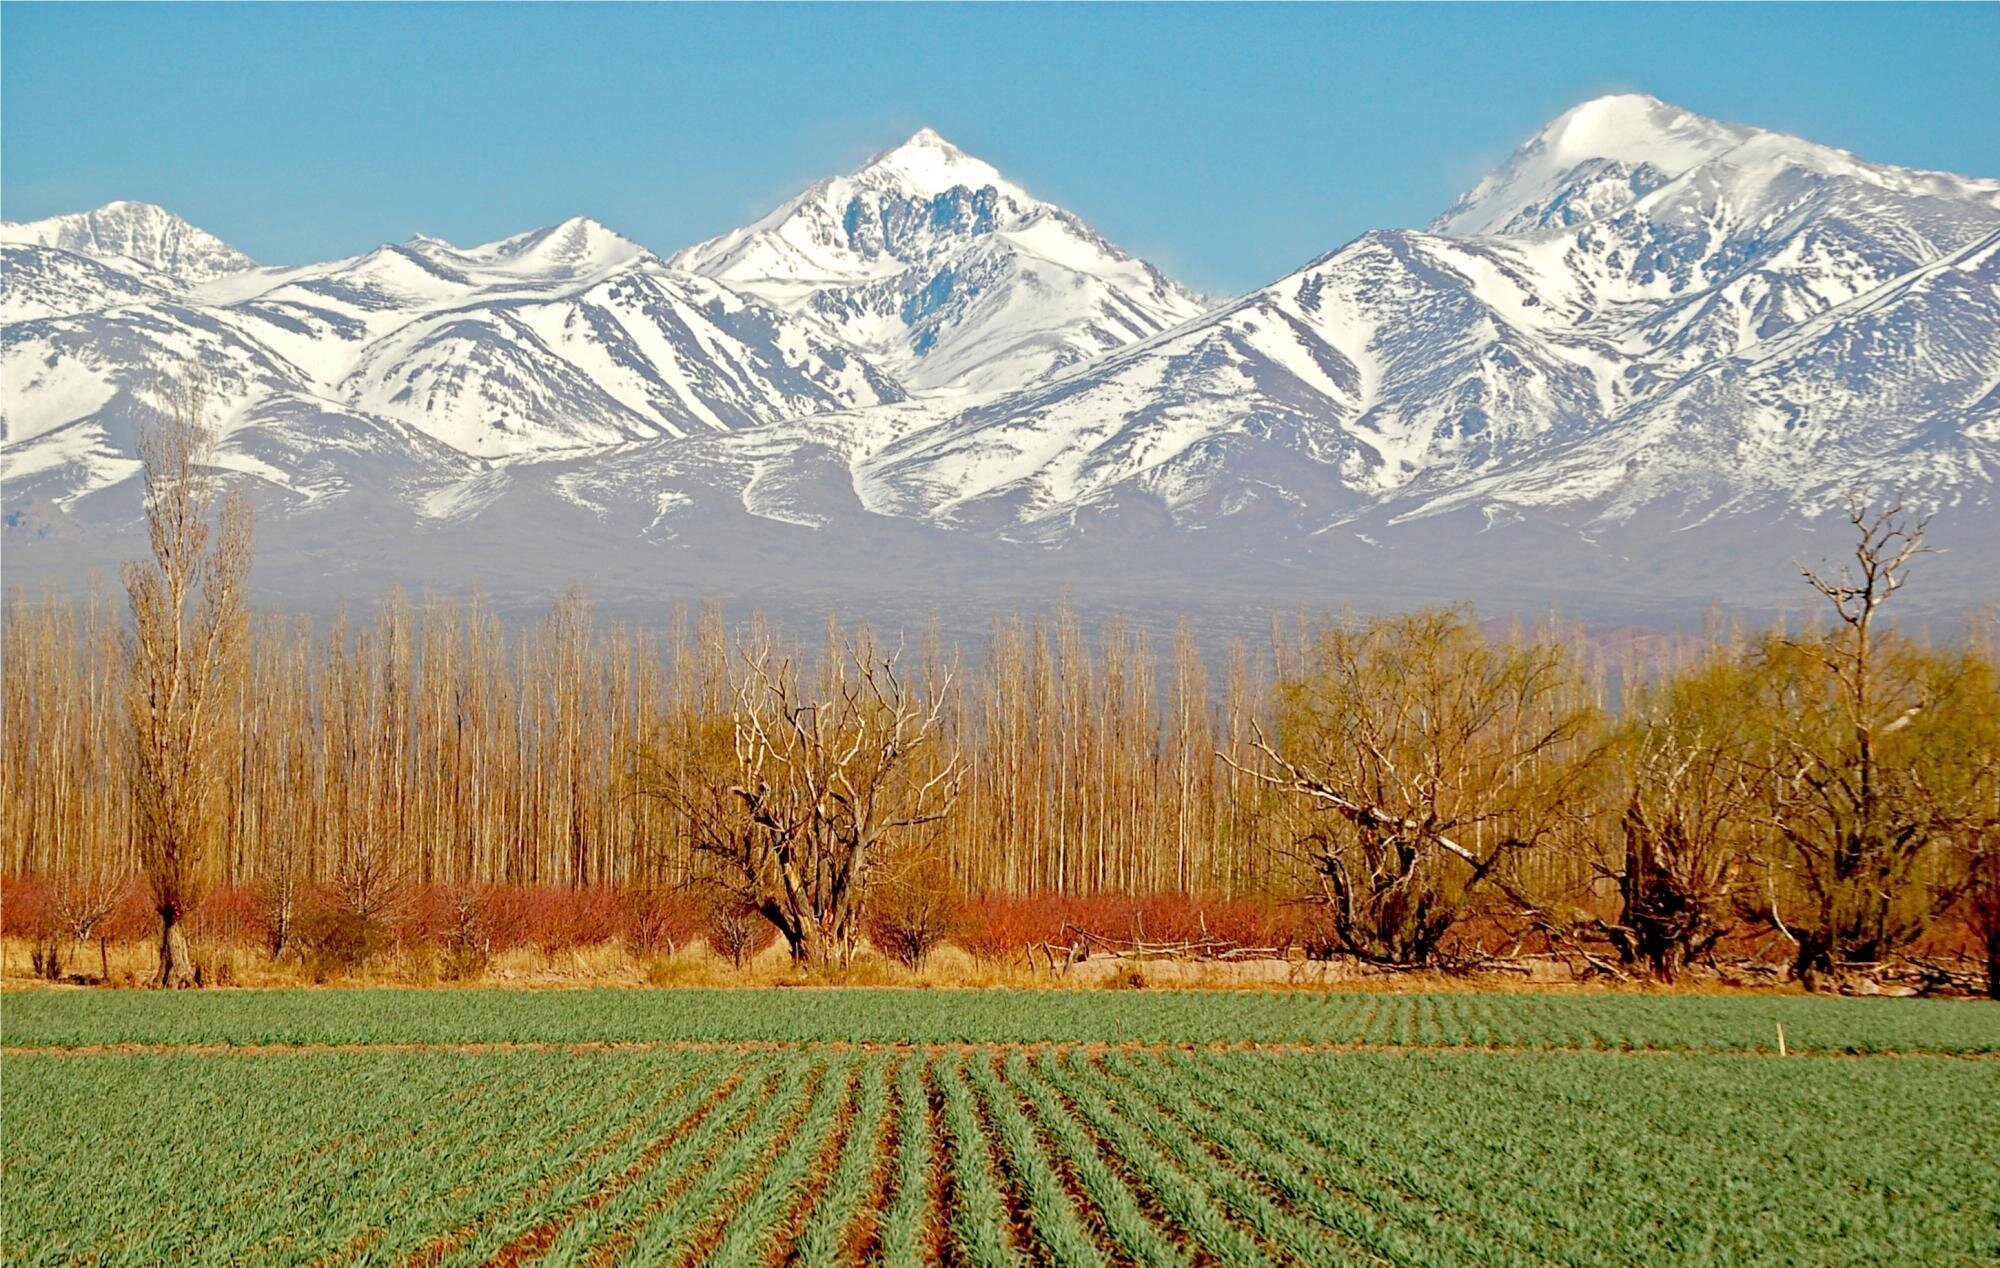 Argentina-Mendoza-Vineyard-with-Mountain-View.jpg